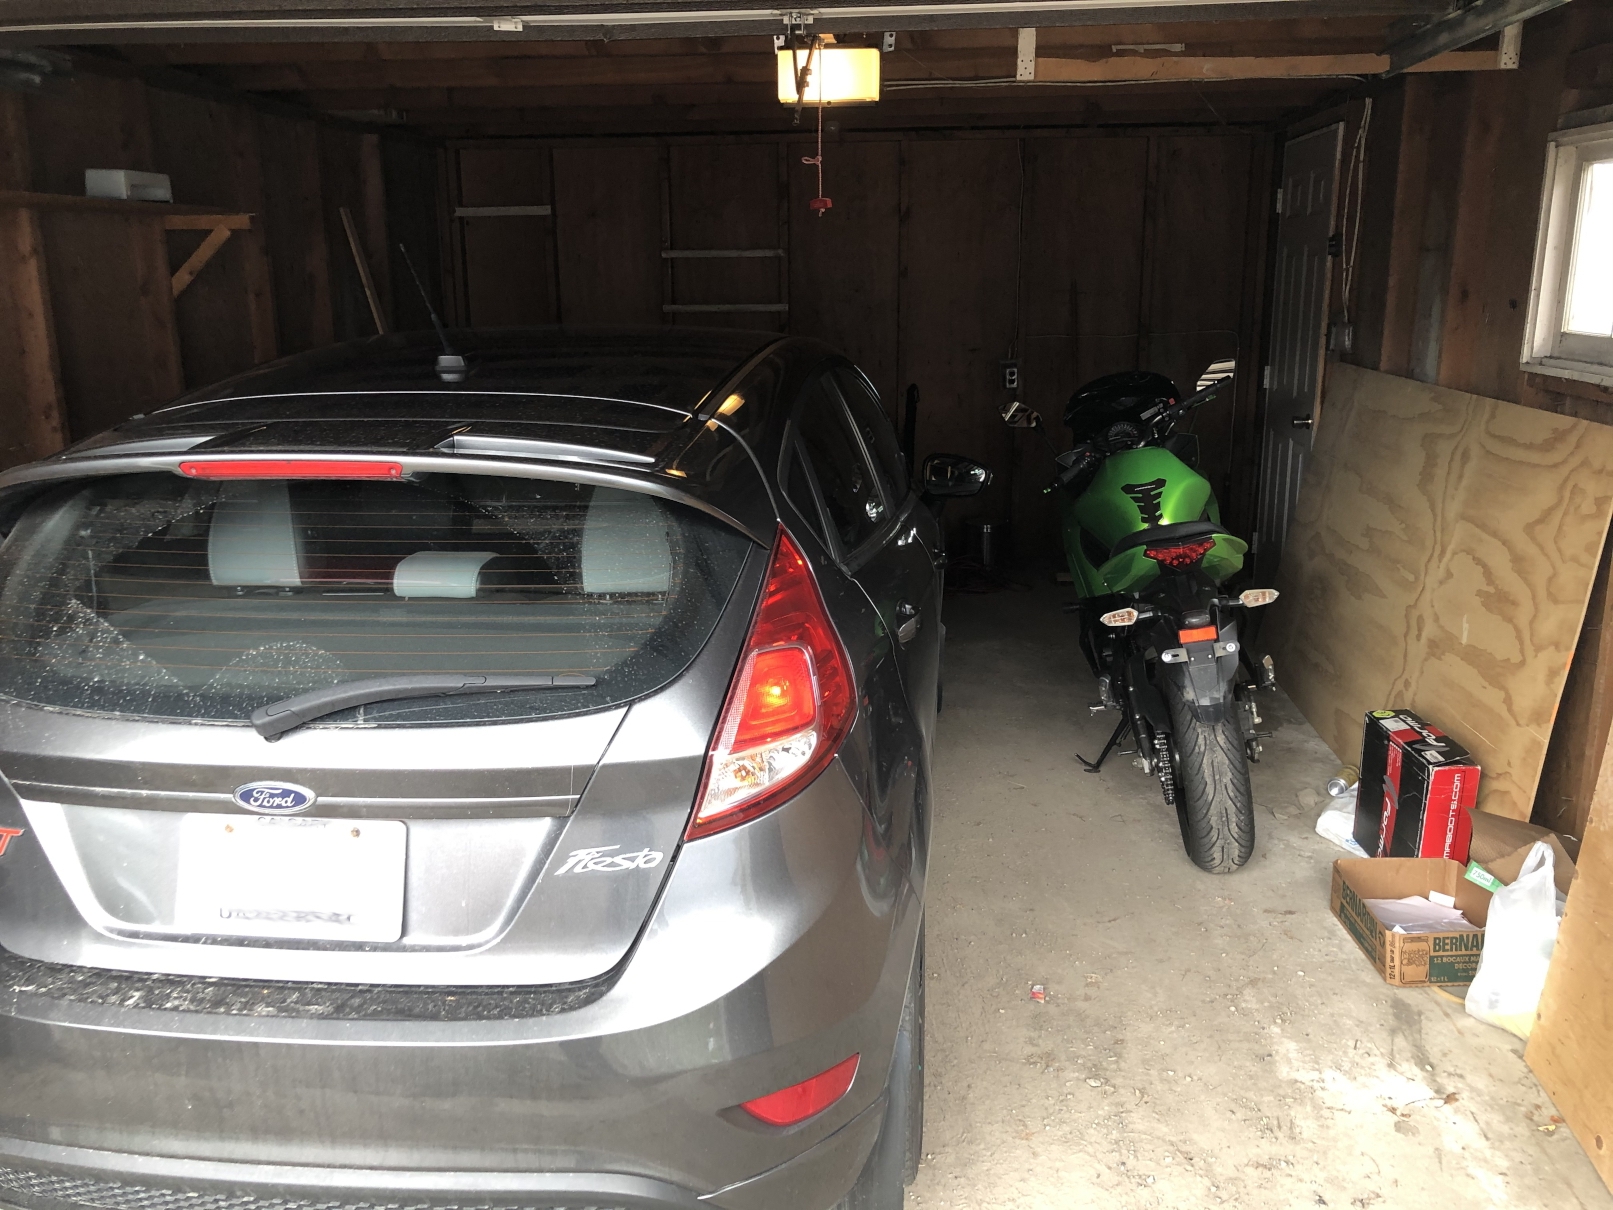 Ninja 650 next to Ford Fiesta in garage